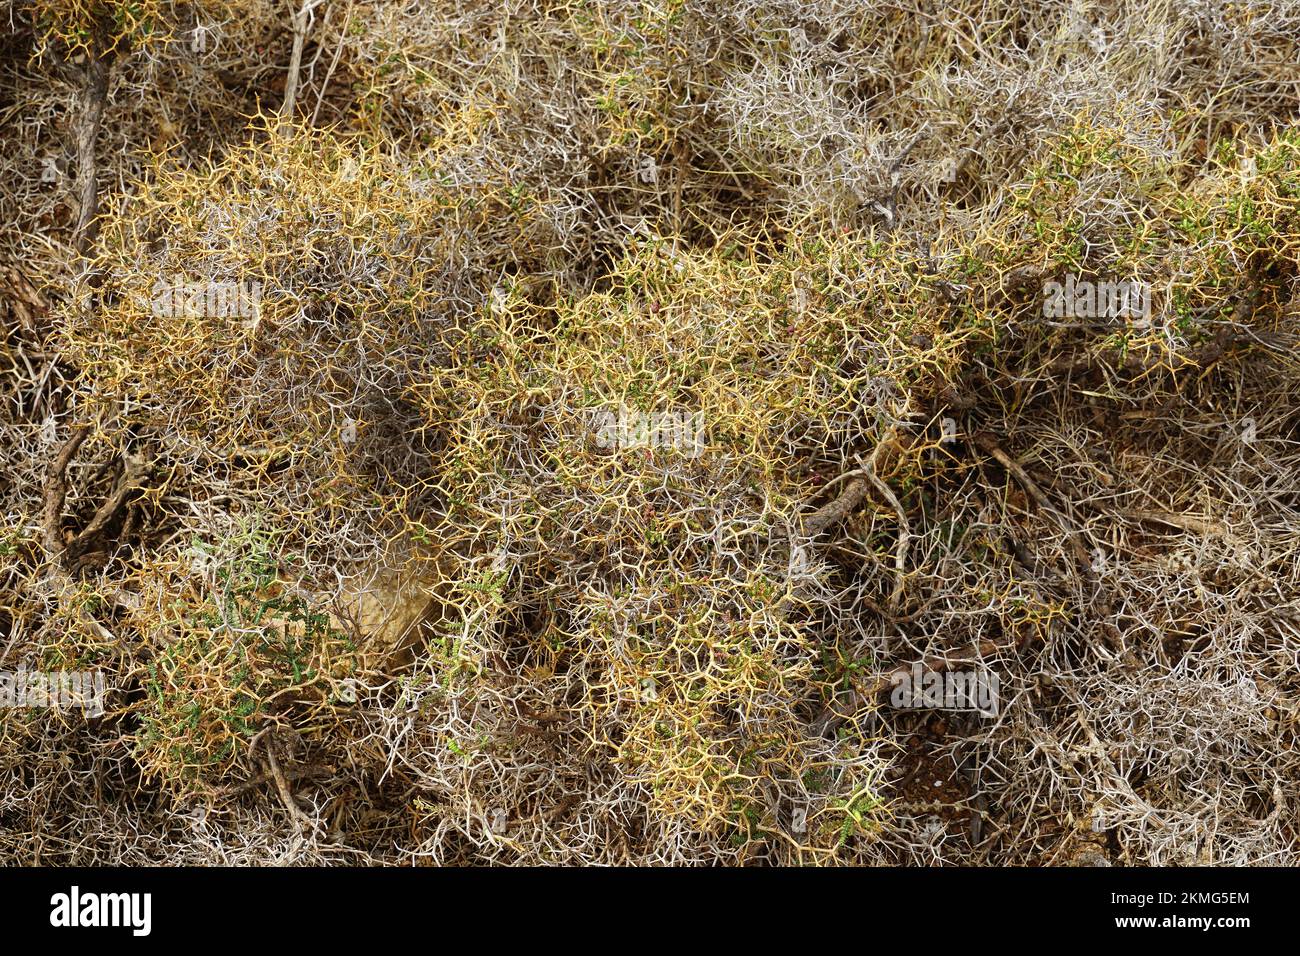 prickly, spiny, or thorny burnet, Sarcopoterium spinosum, Gramvousa Peninsula, Chersonesos Gramvousas, Crete, Greece, Europe Stock Photo